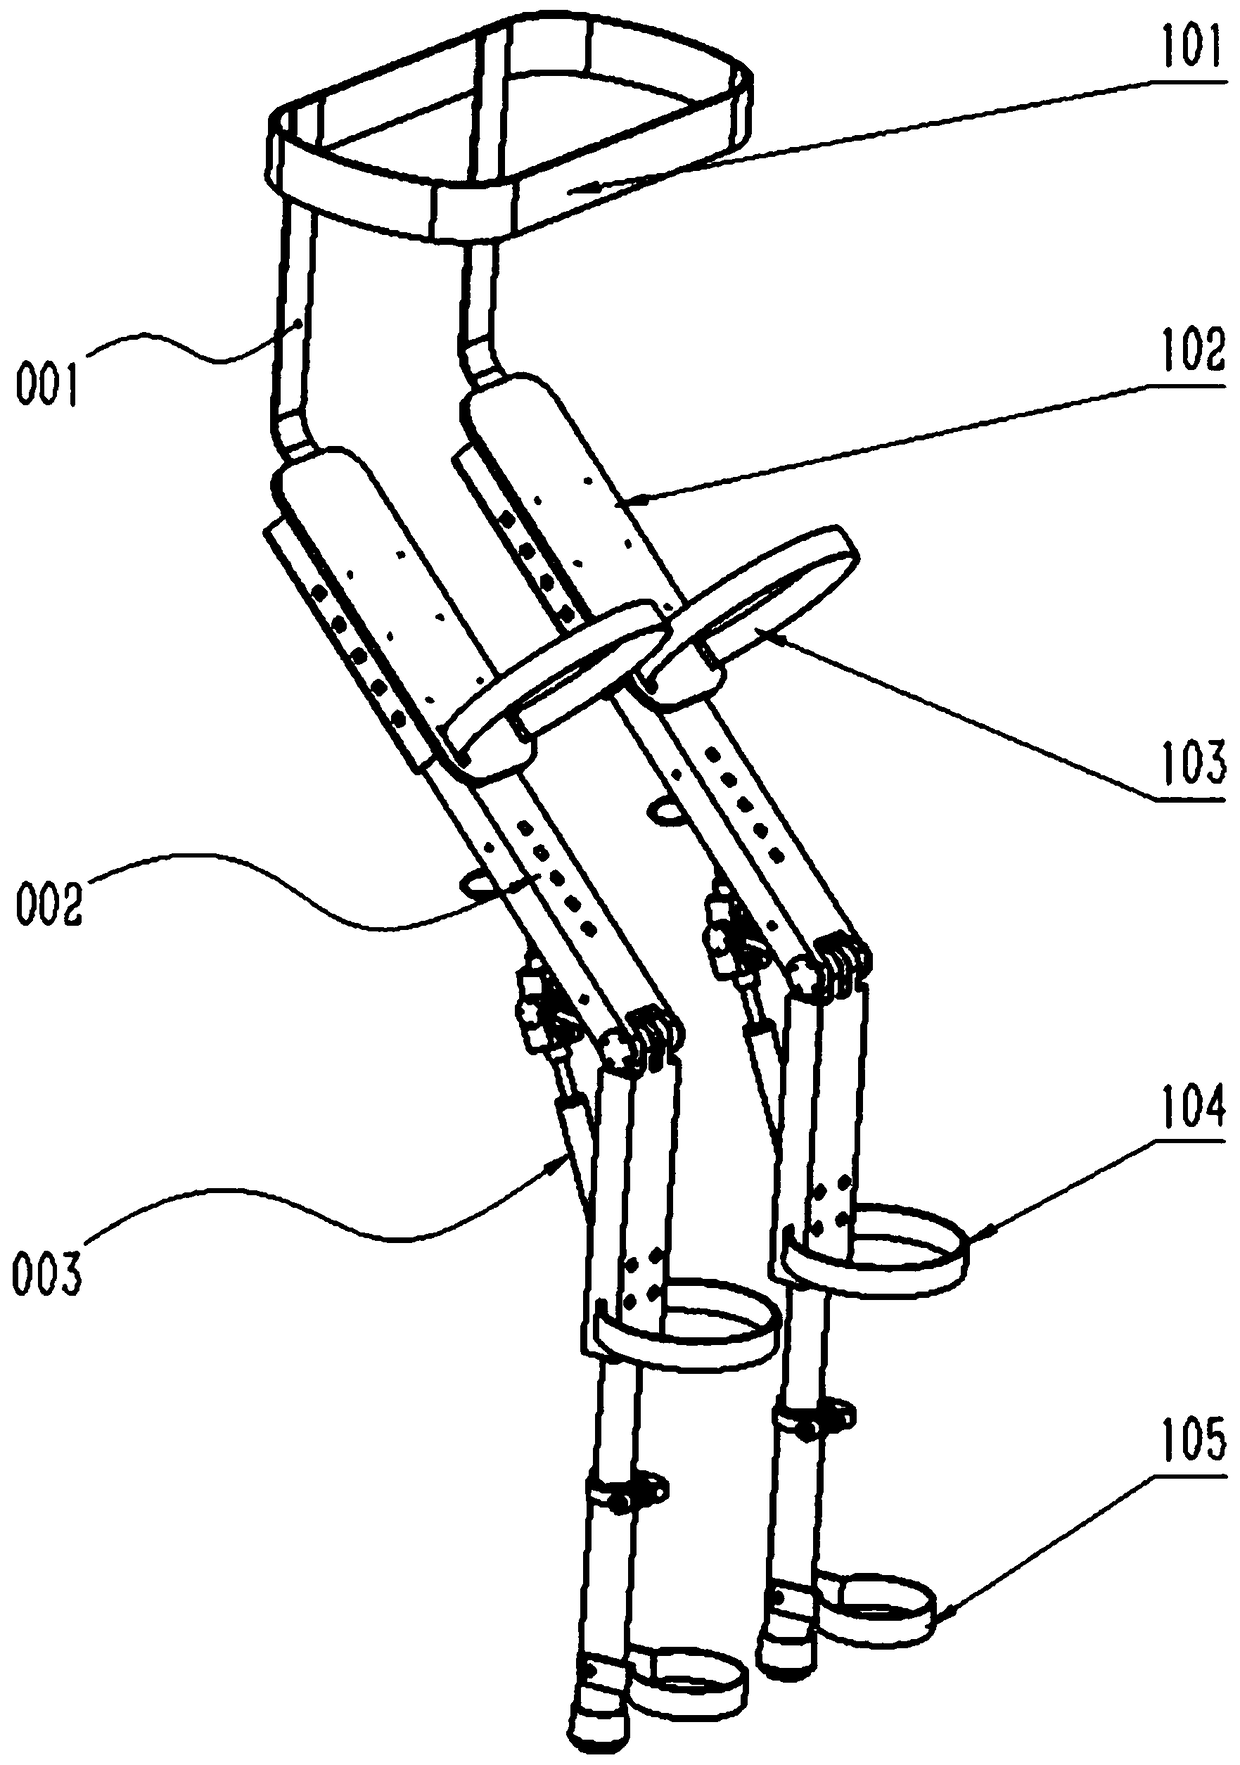 Height-adjustable exoskeleton seat